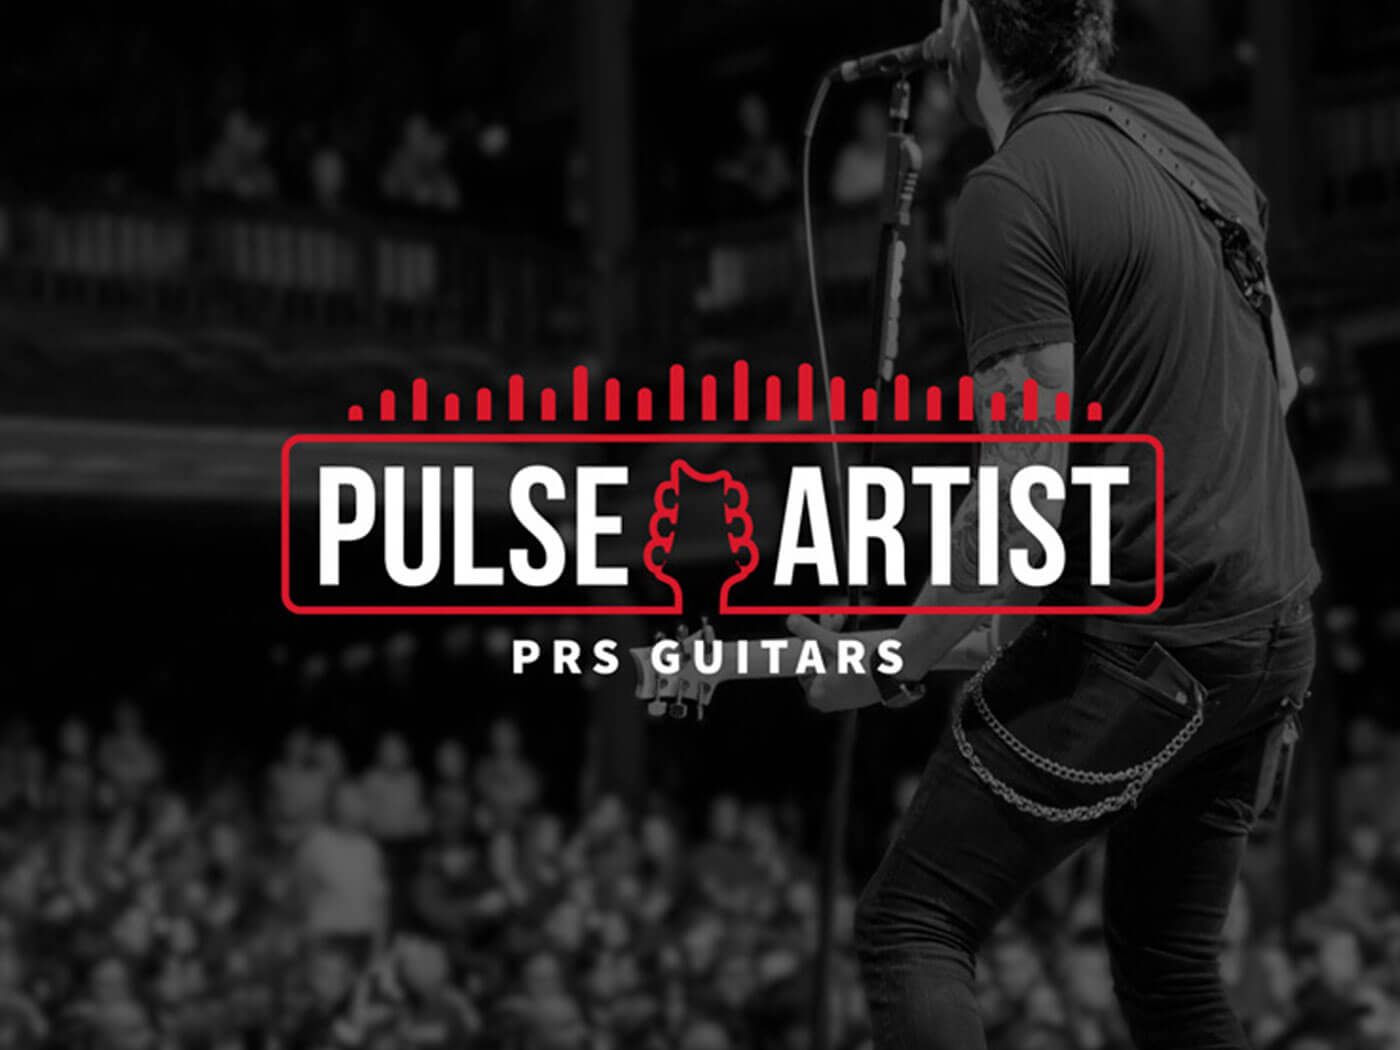 PRS' Pulse Artist program